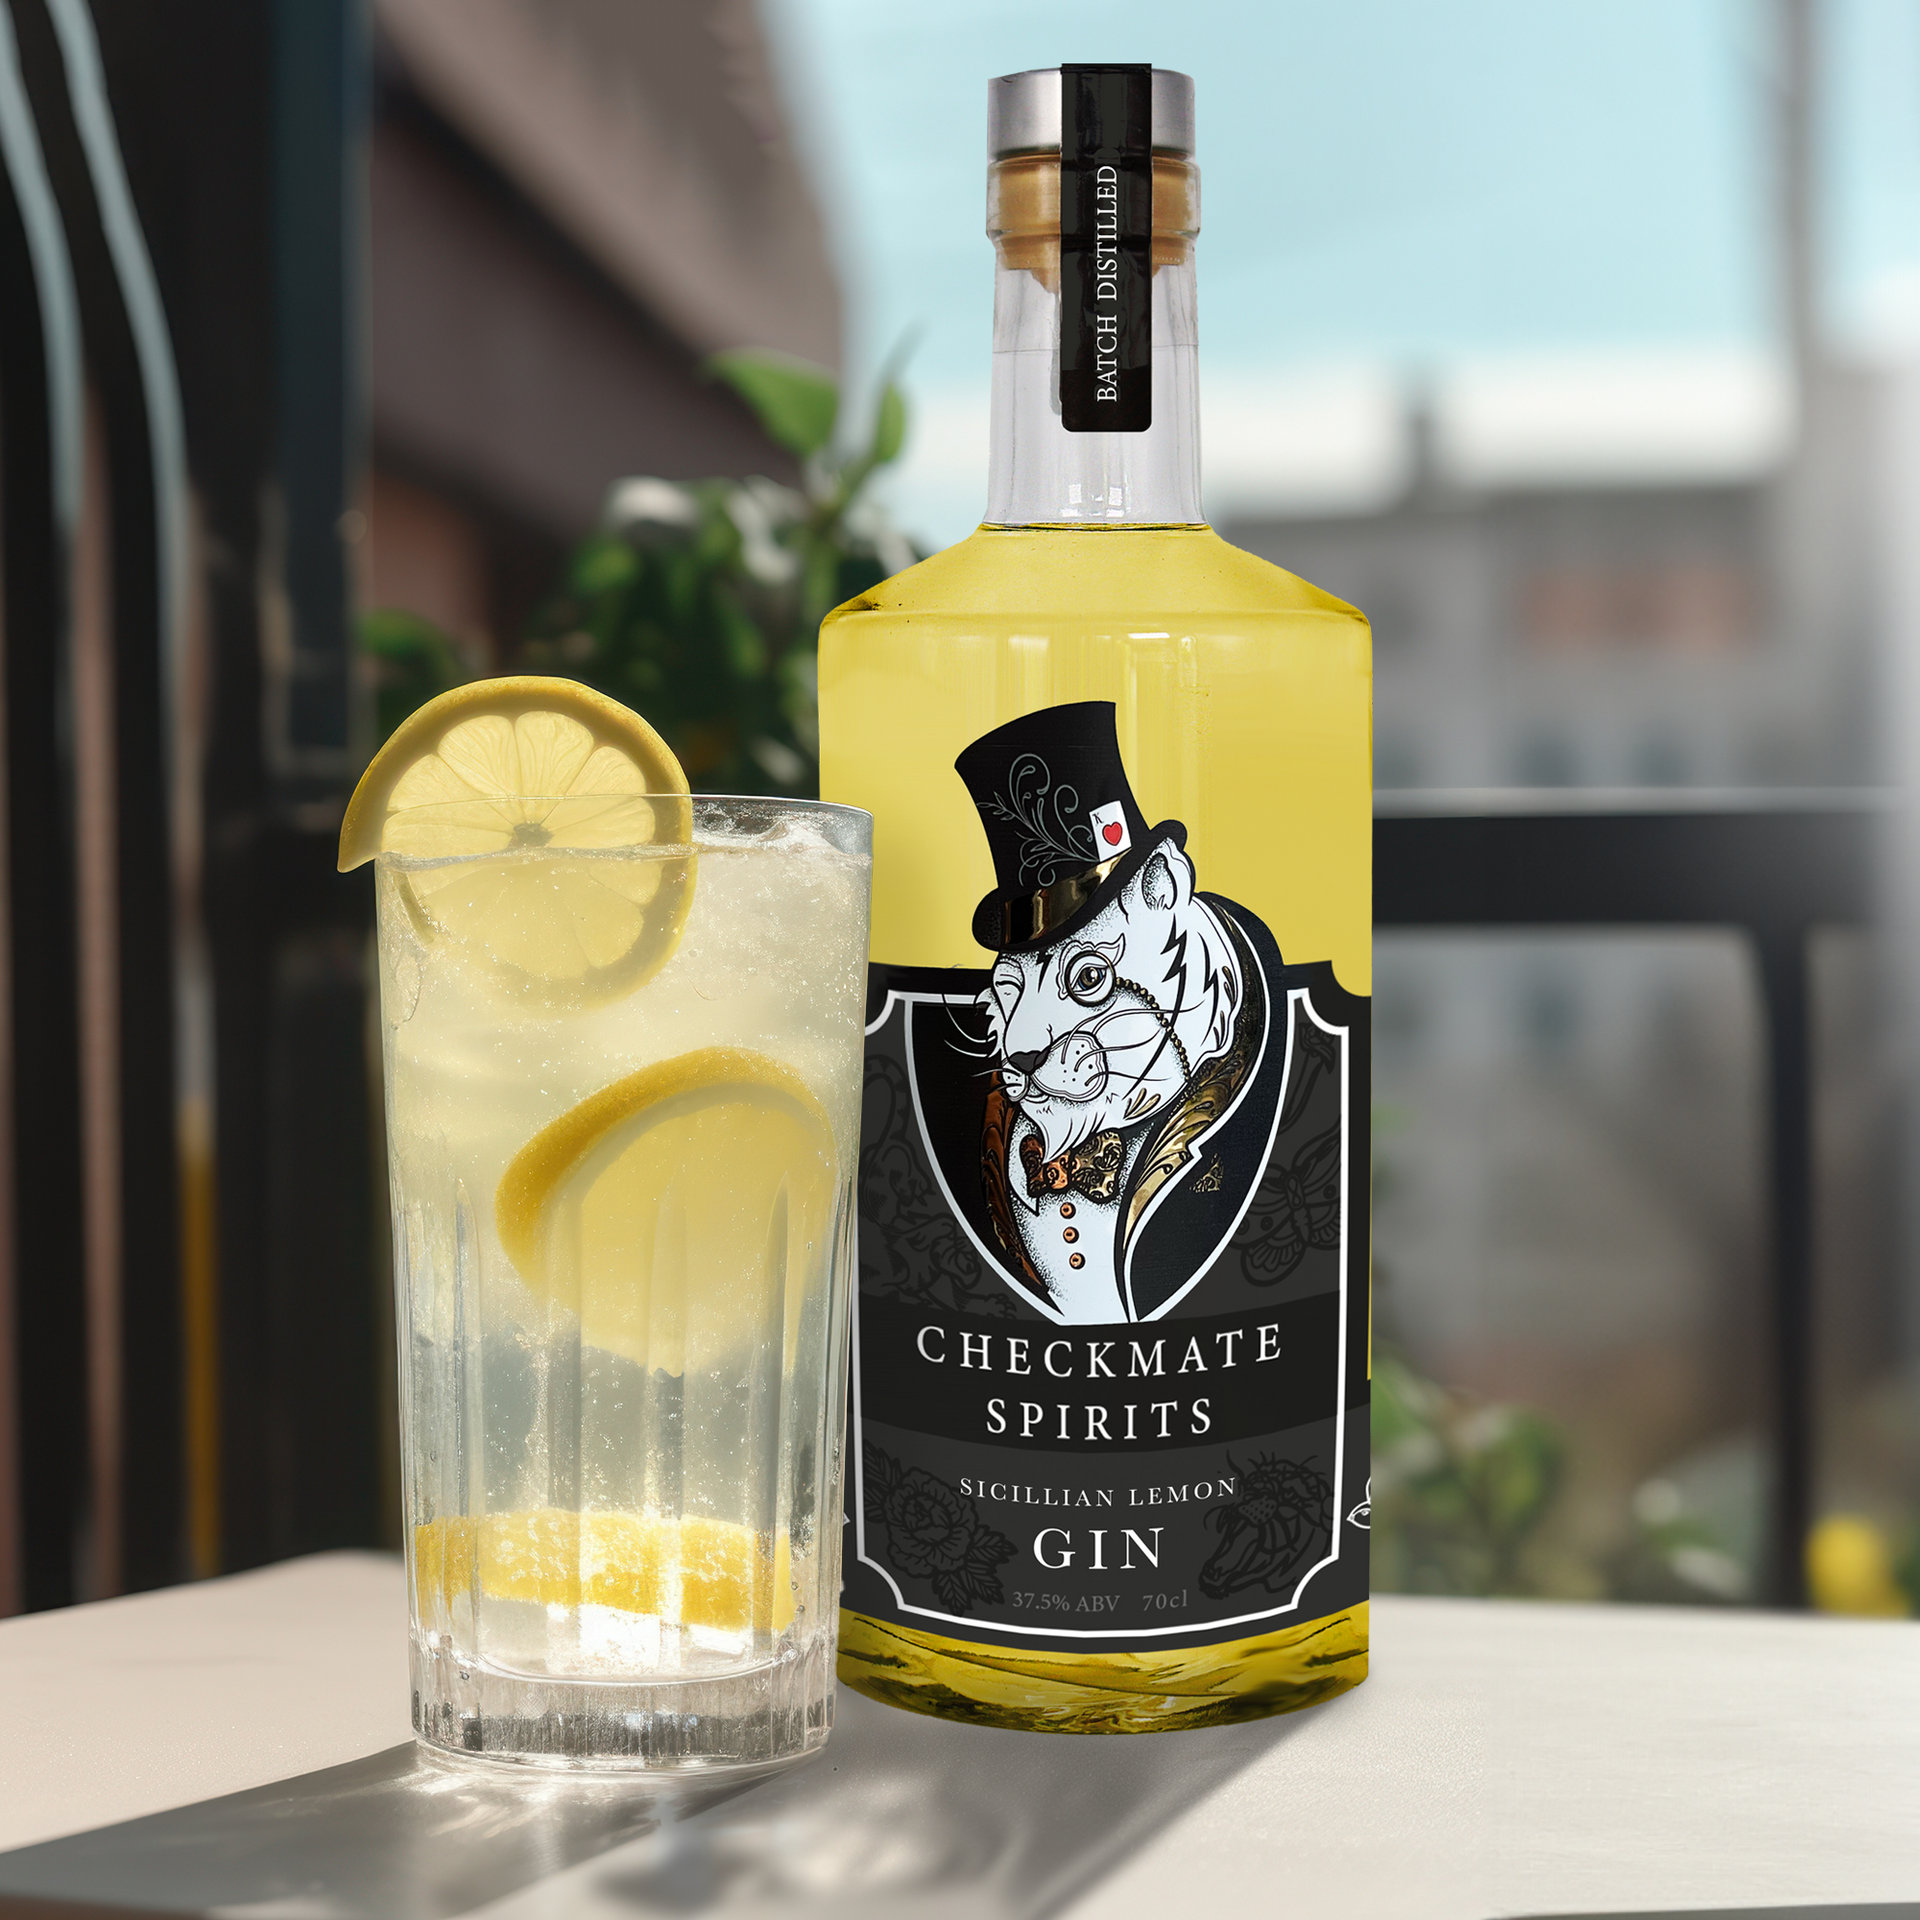 Sicilian Lemon Gin – Checkmate Spirits